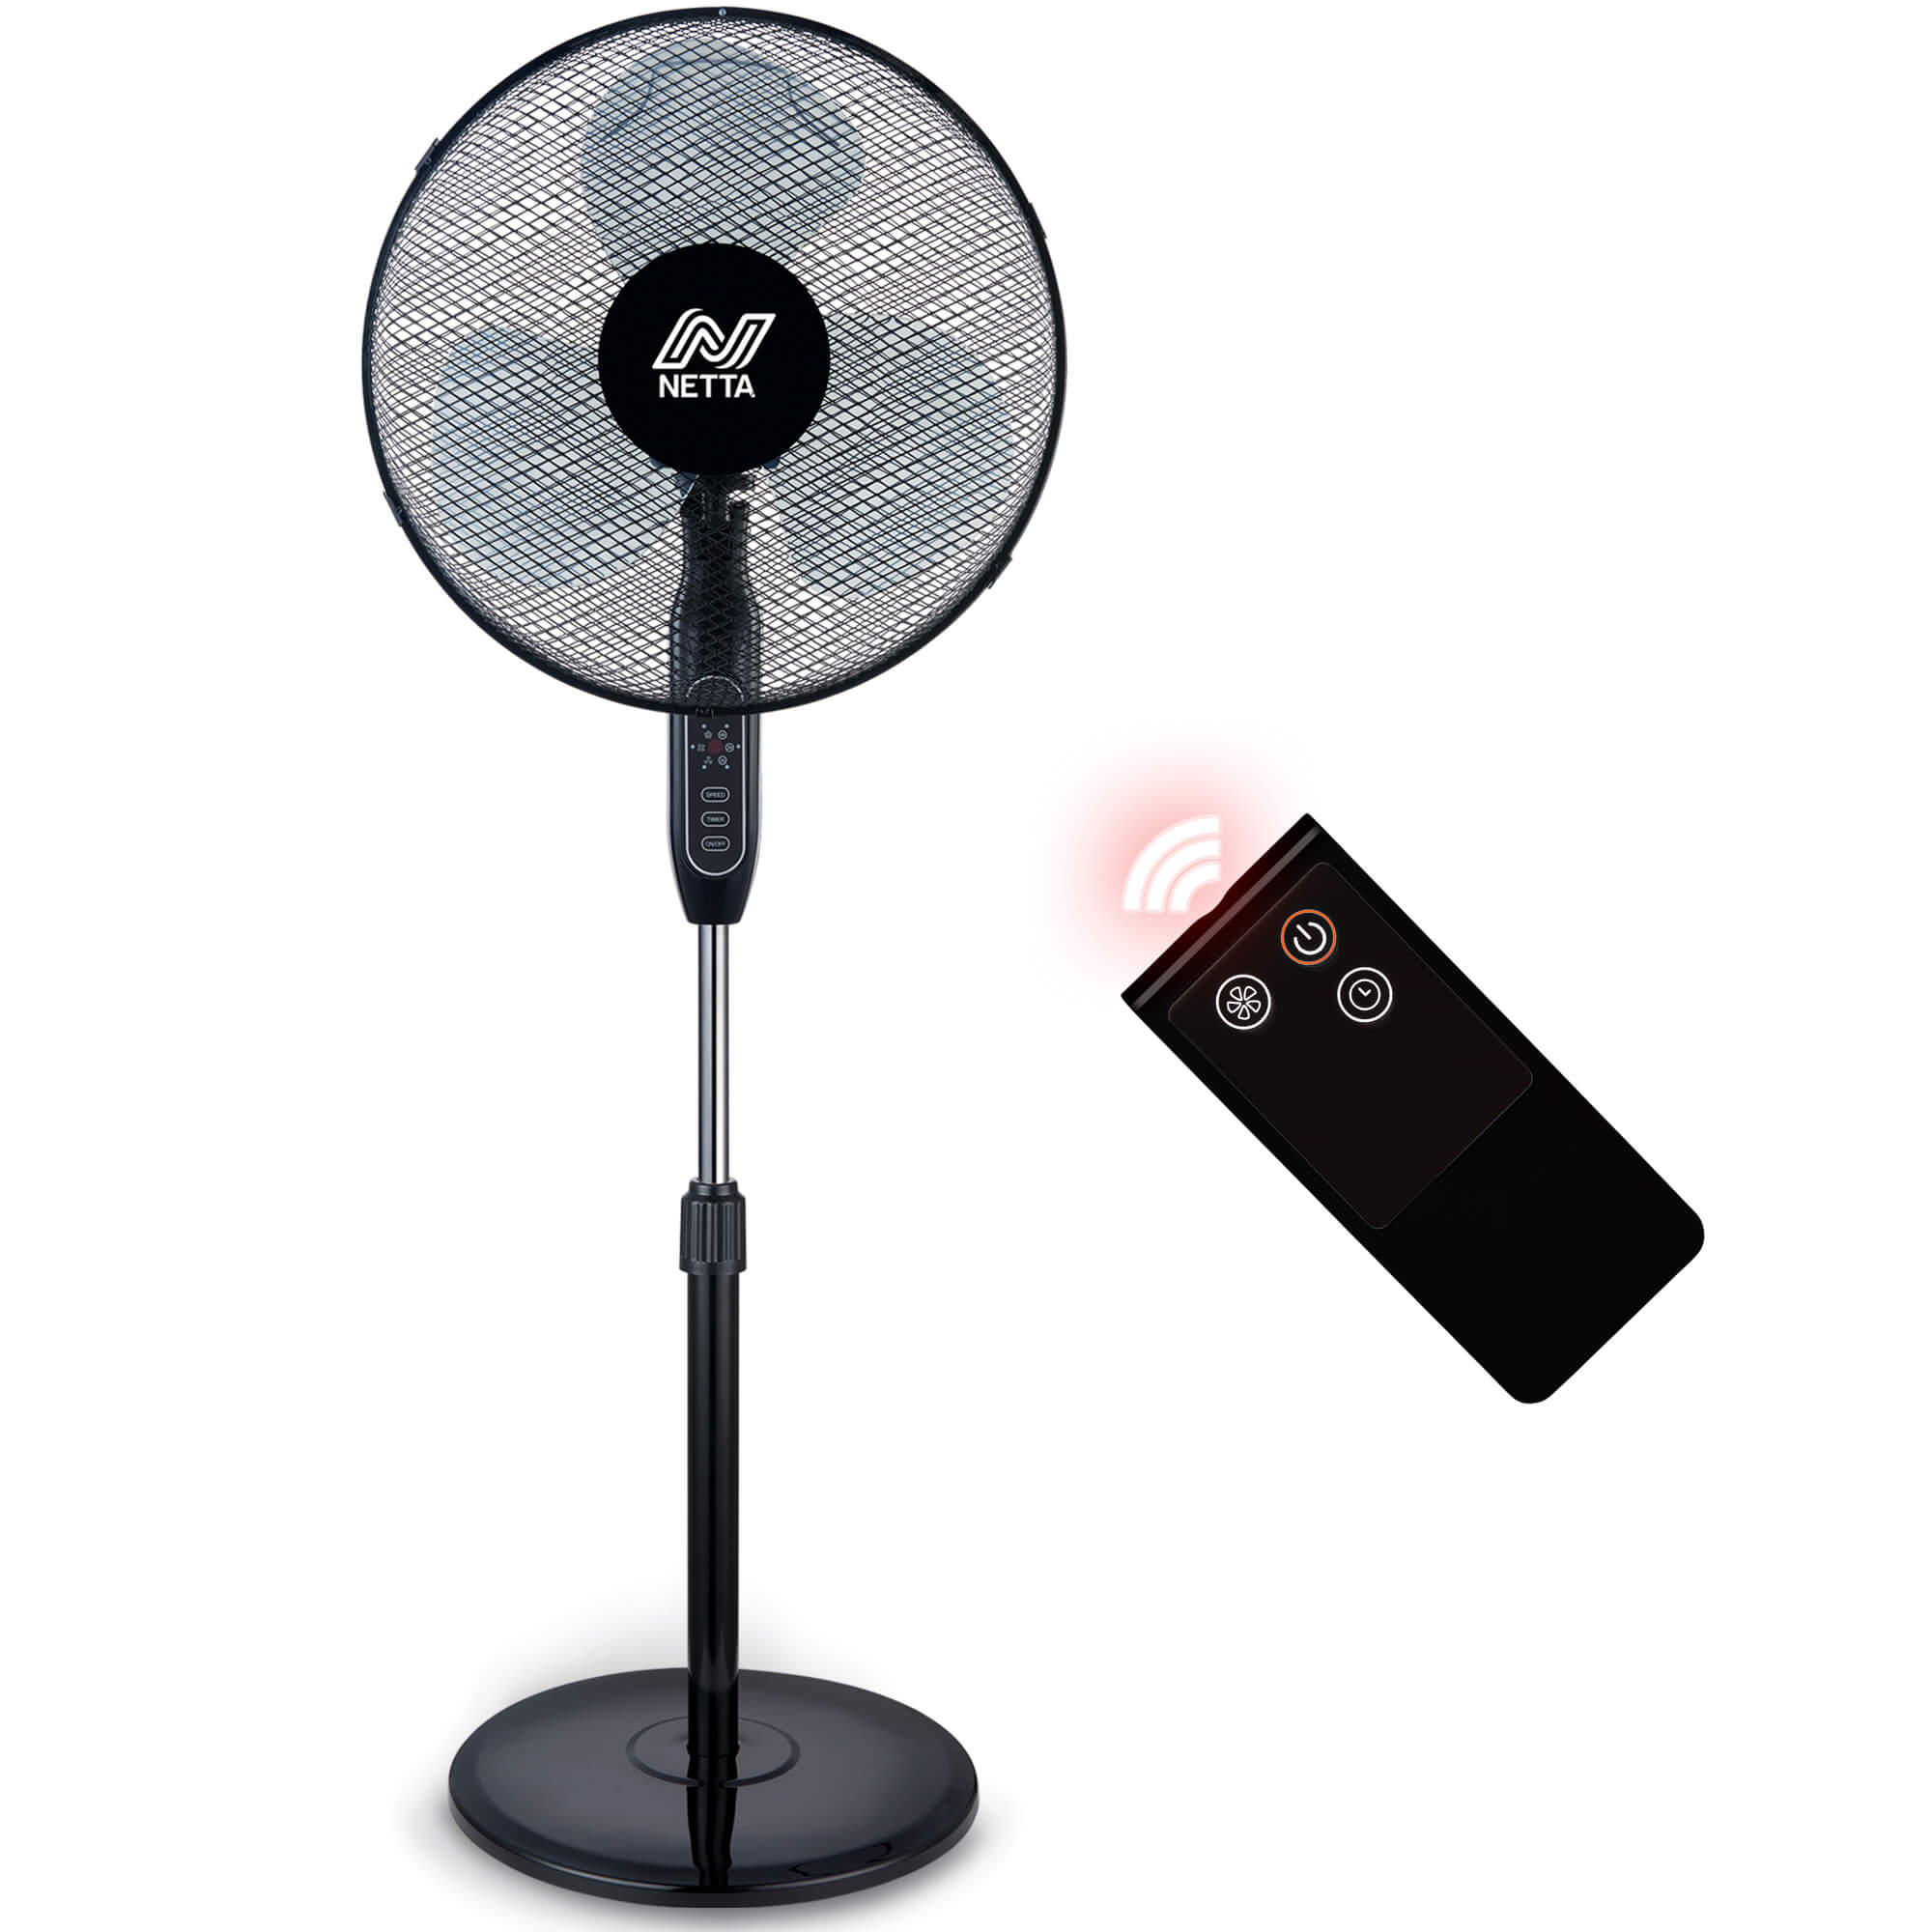 NETTA 16 Inch Pedestal Fan With Remote Control - Black